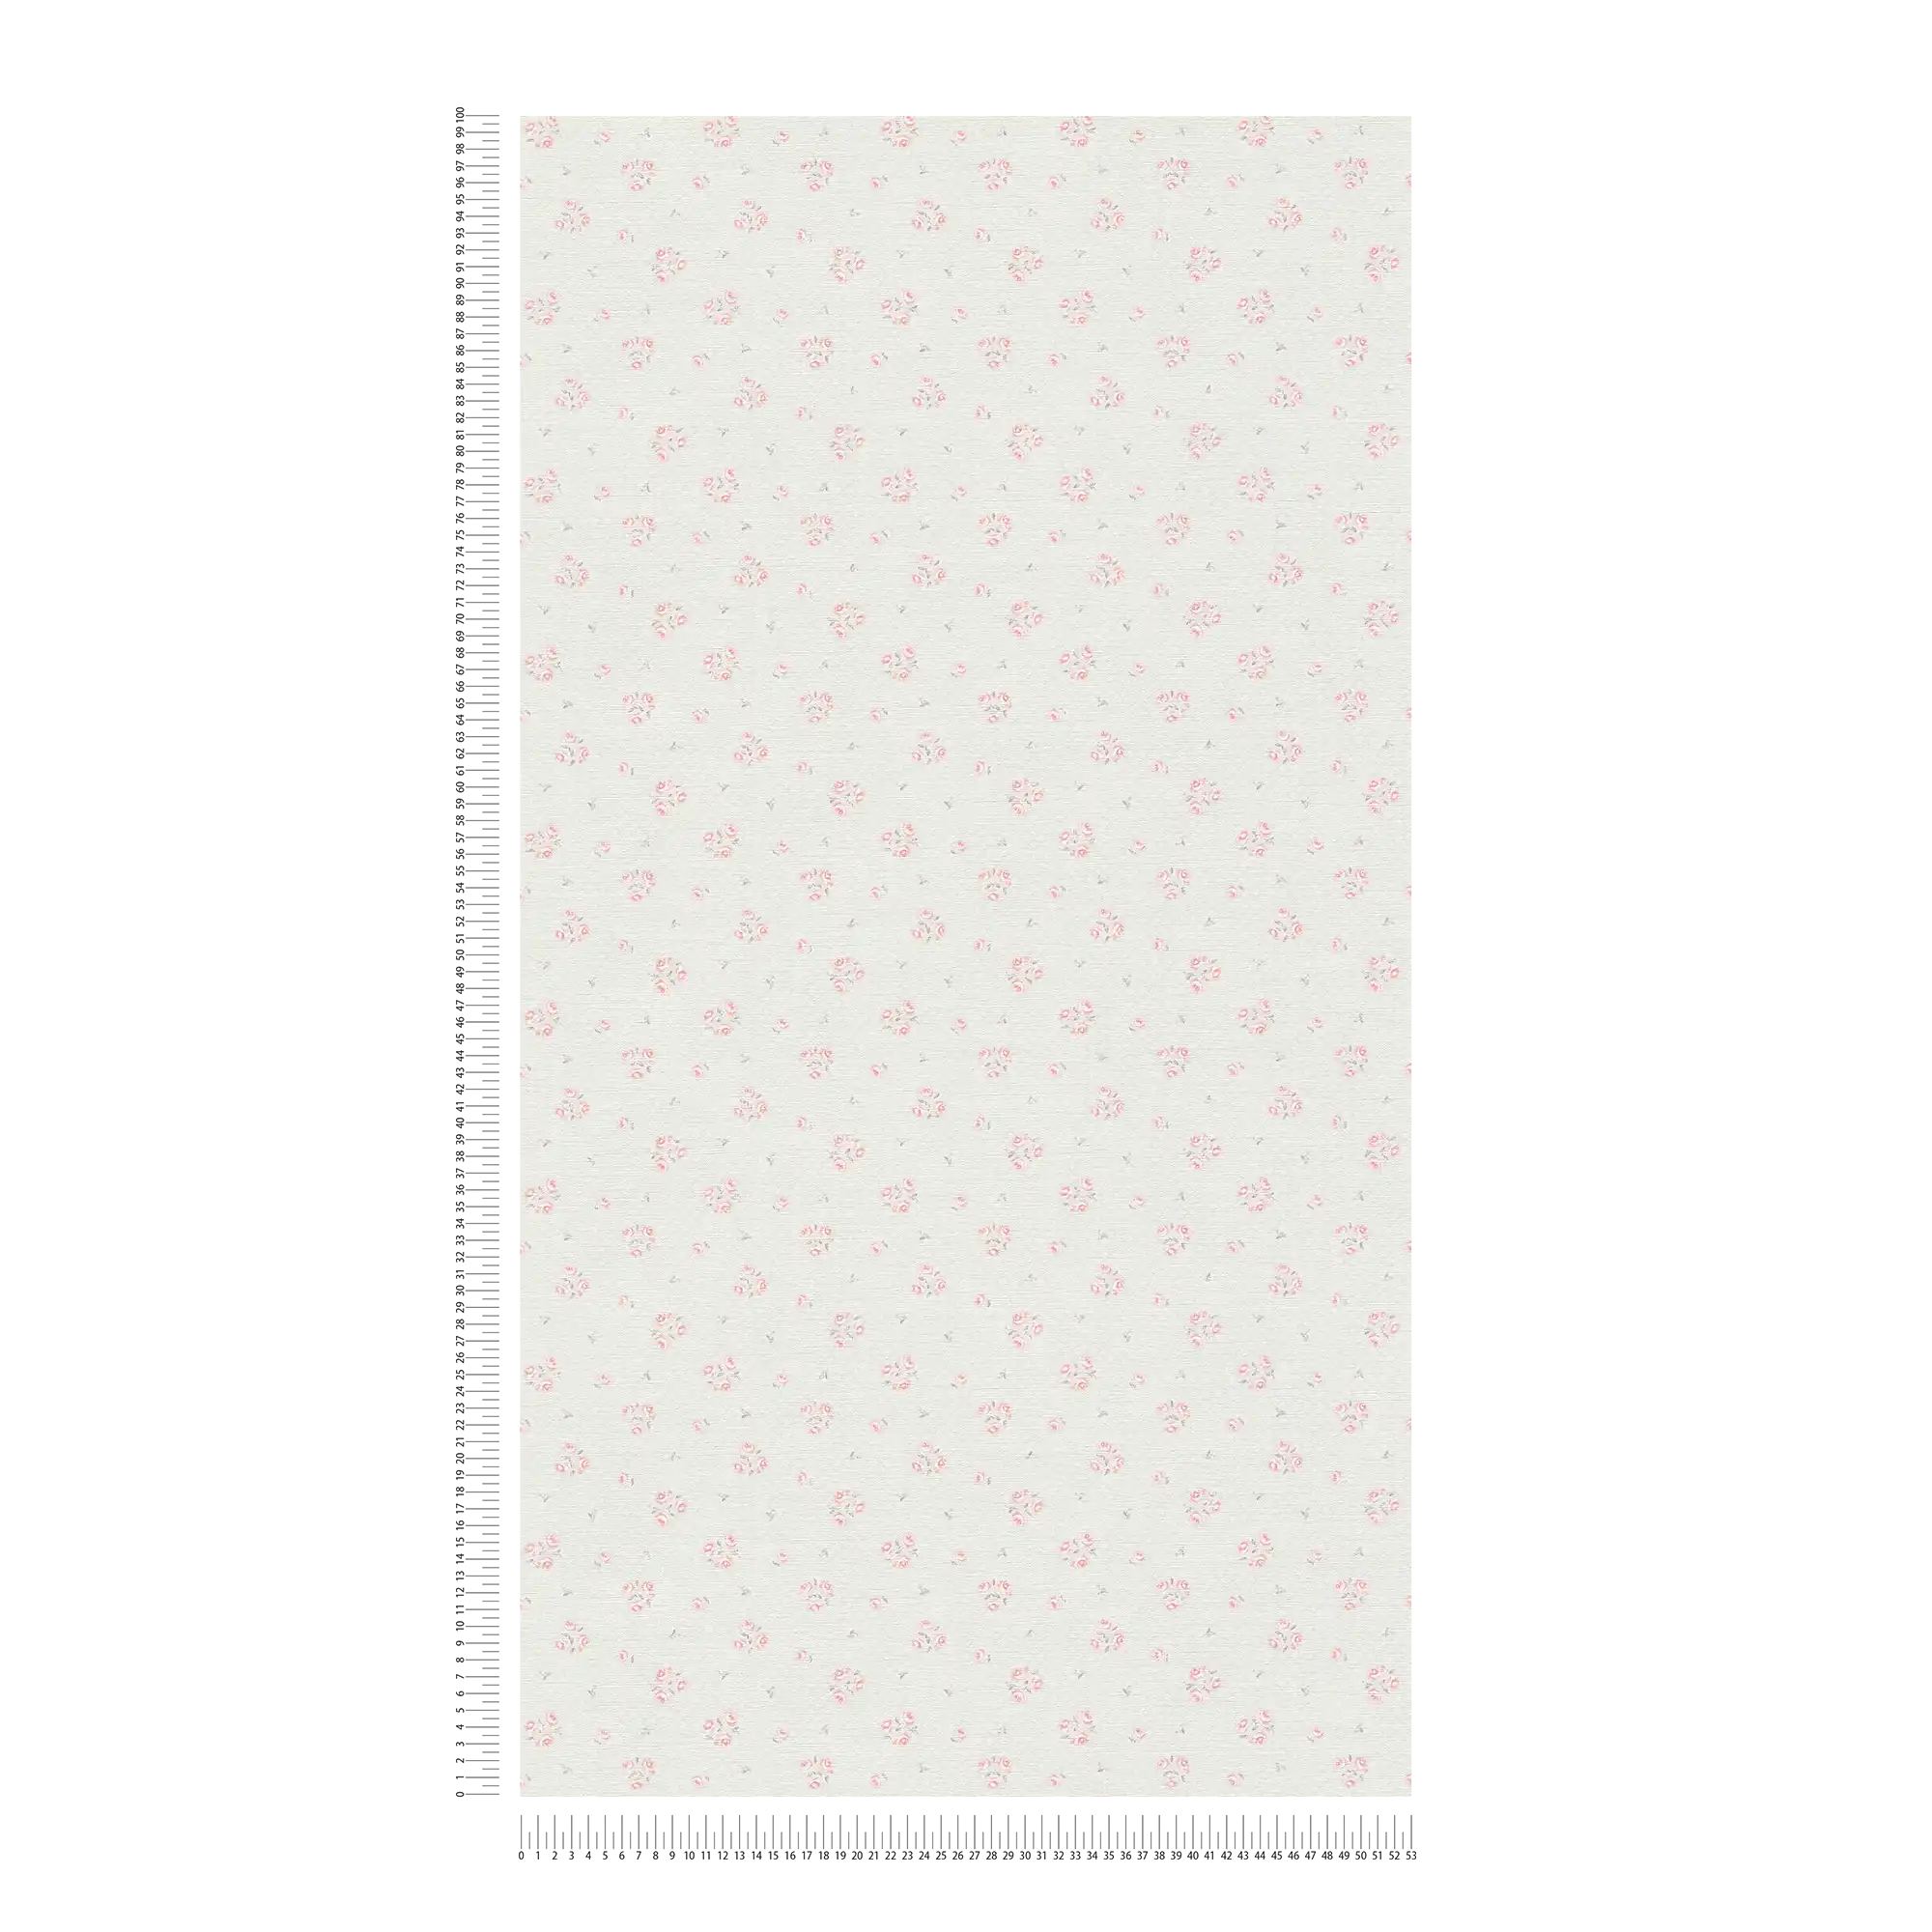             Papel pintado no tejido con fino motivo floral Shabby Chic - gris claro, rojo, blanco
        